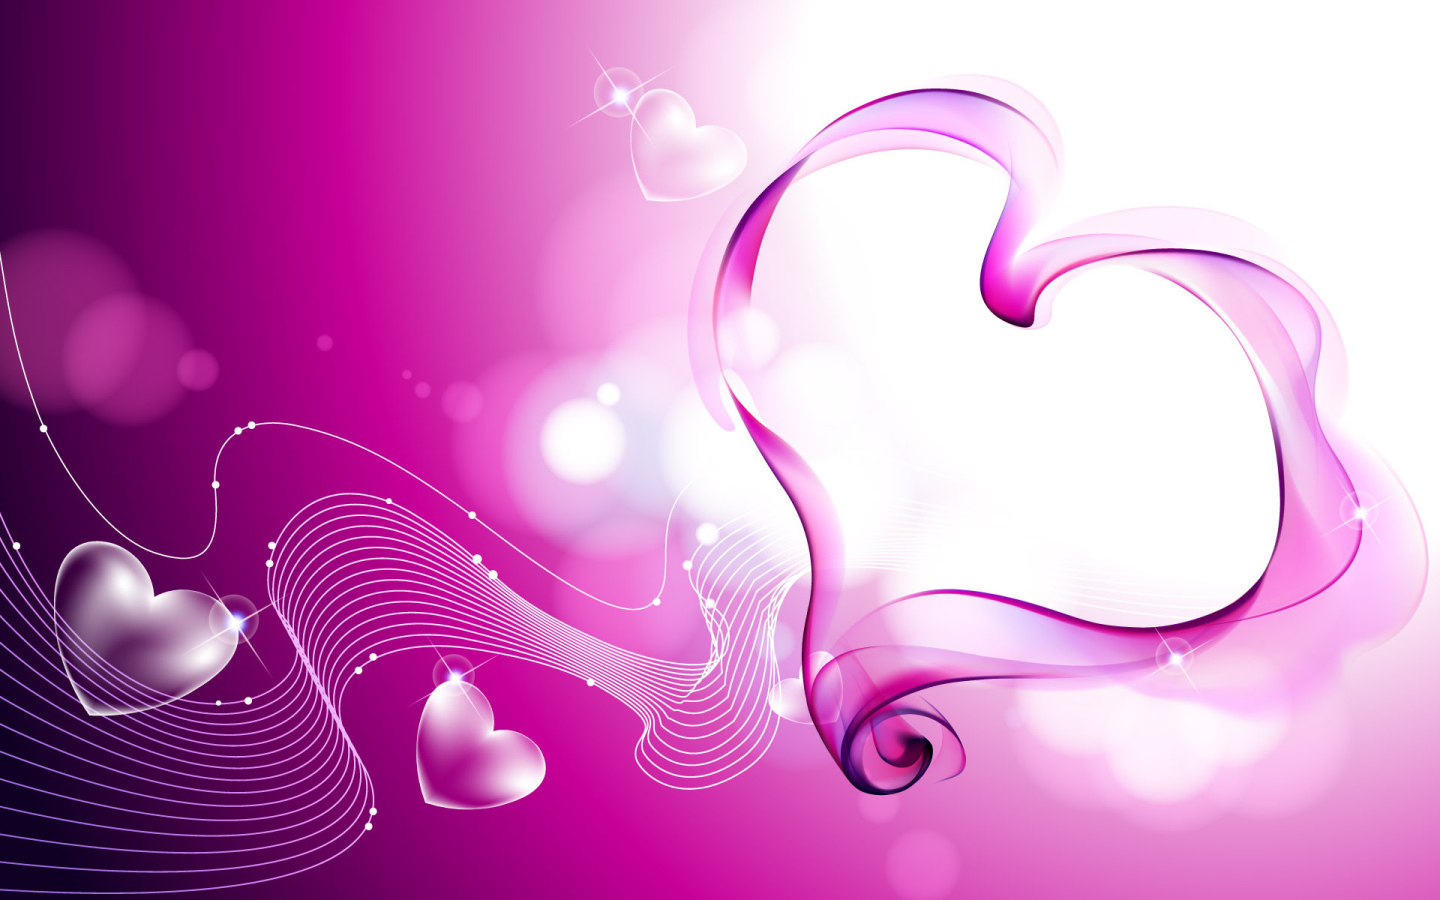 Pink love music